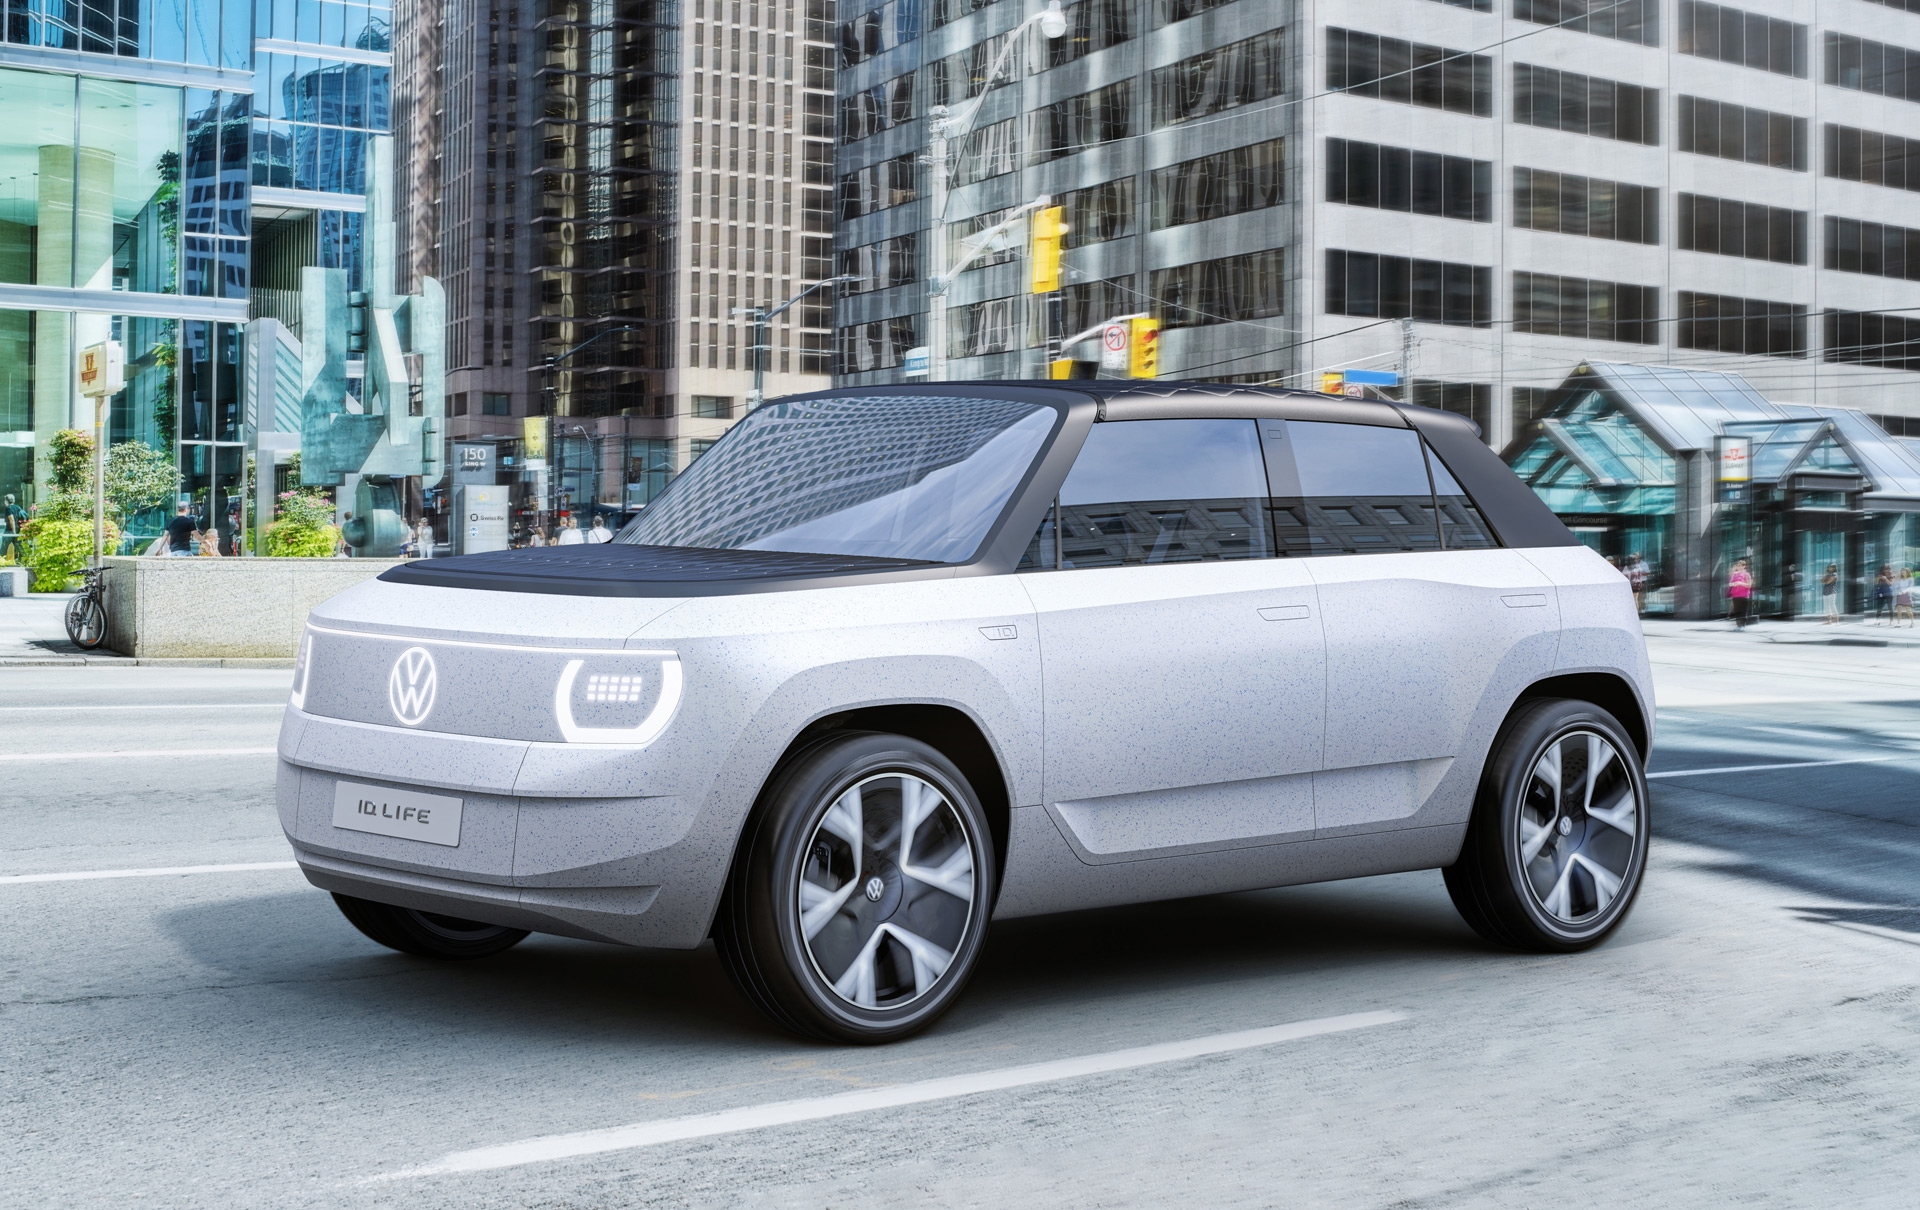 VW ID.Life concept previews $24,000 EV built on pared-down MEB platformVW ID.Life concept previews $24,000 EV built on pared-down MEB platform